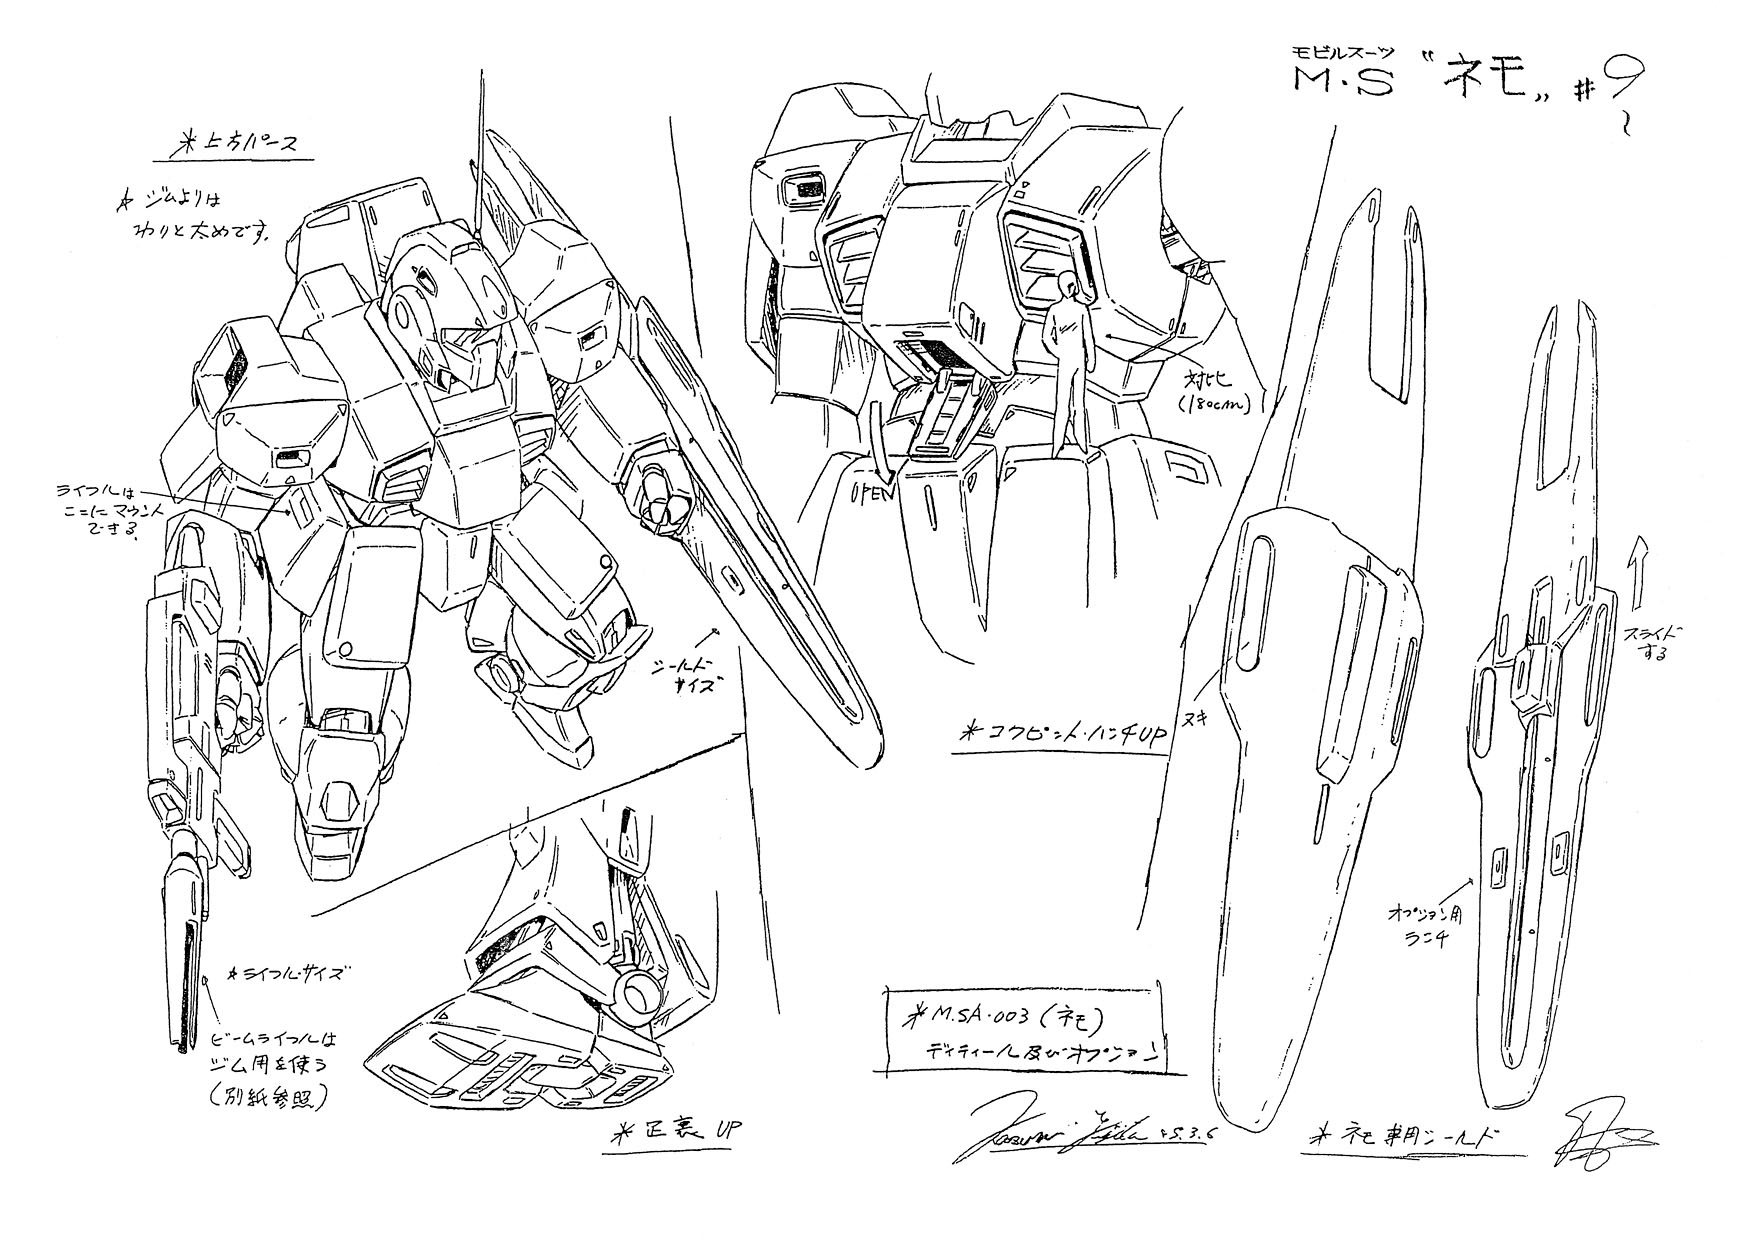 Production History: Z Gundam